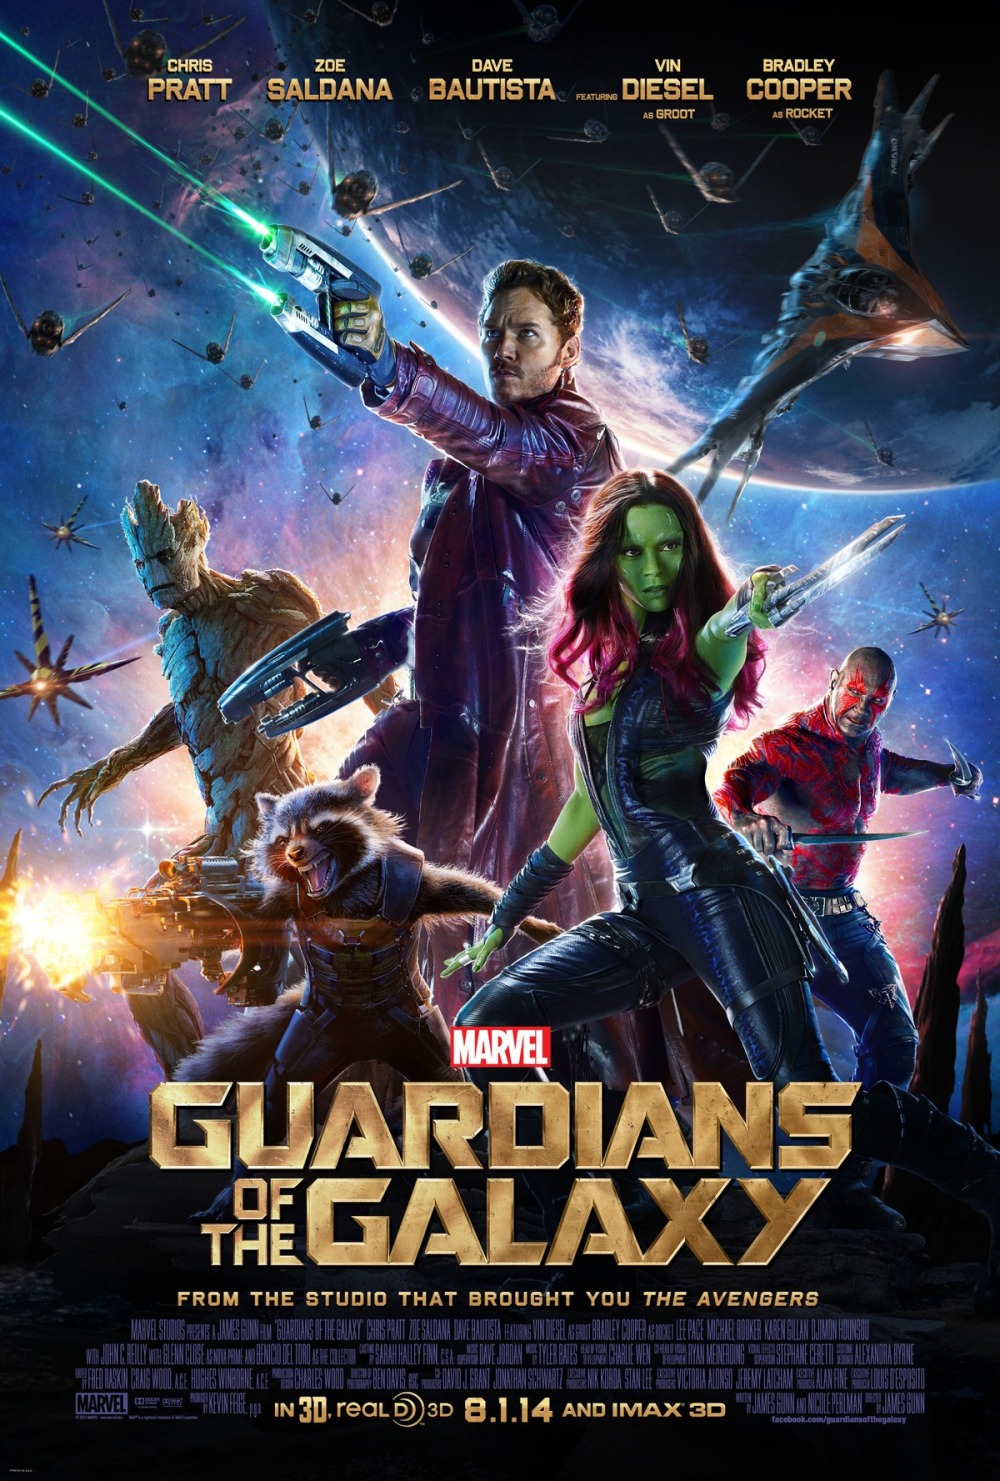 James Gunn over 'Guardians of the Galaxy 2'